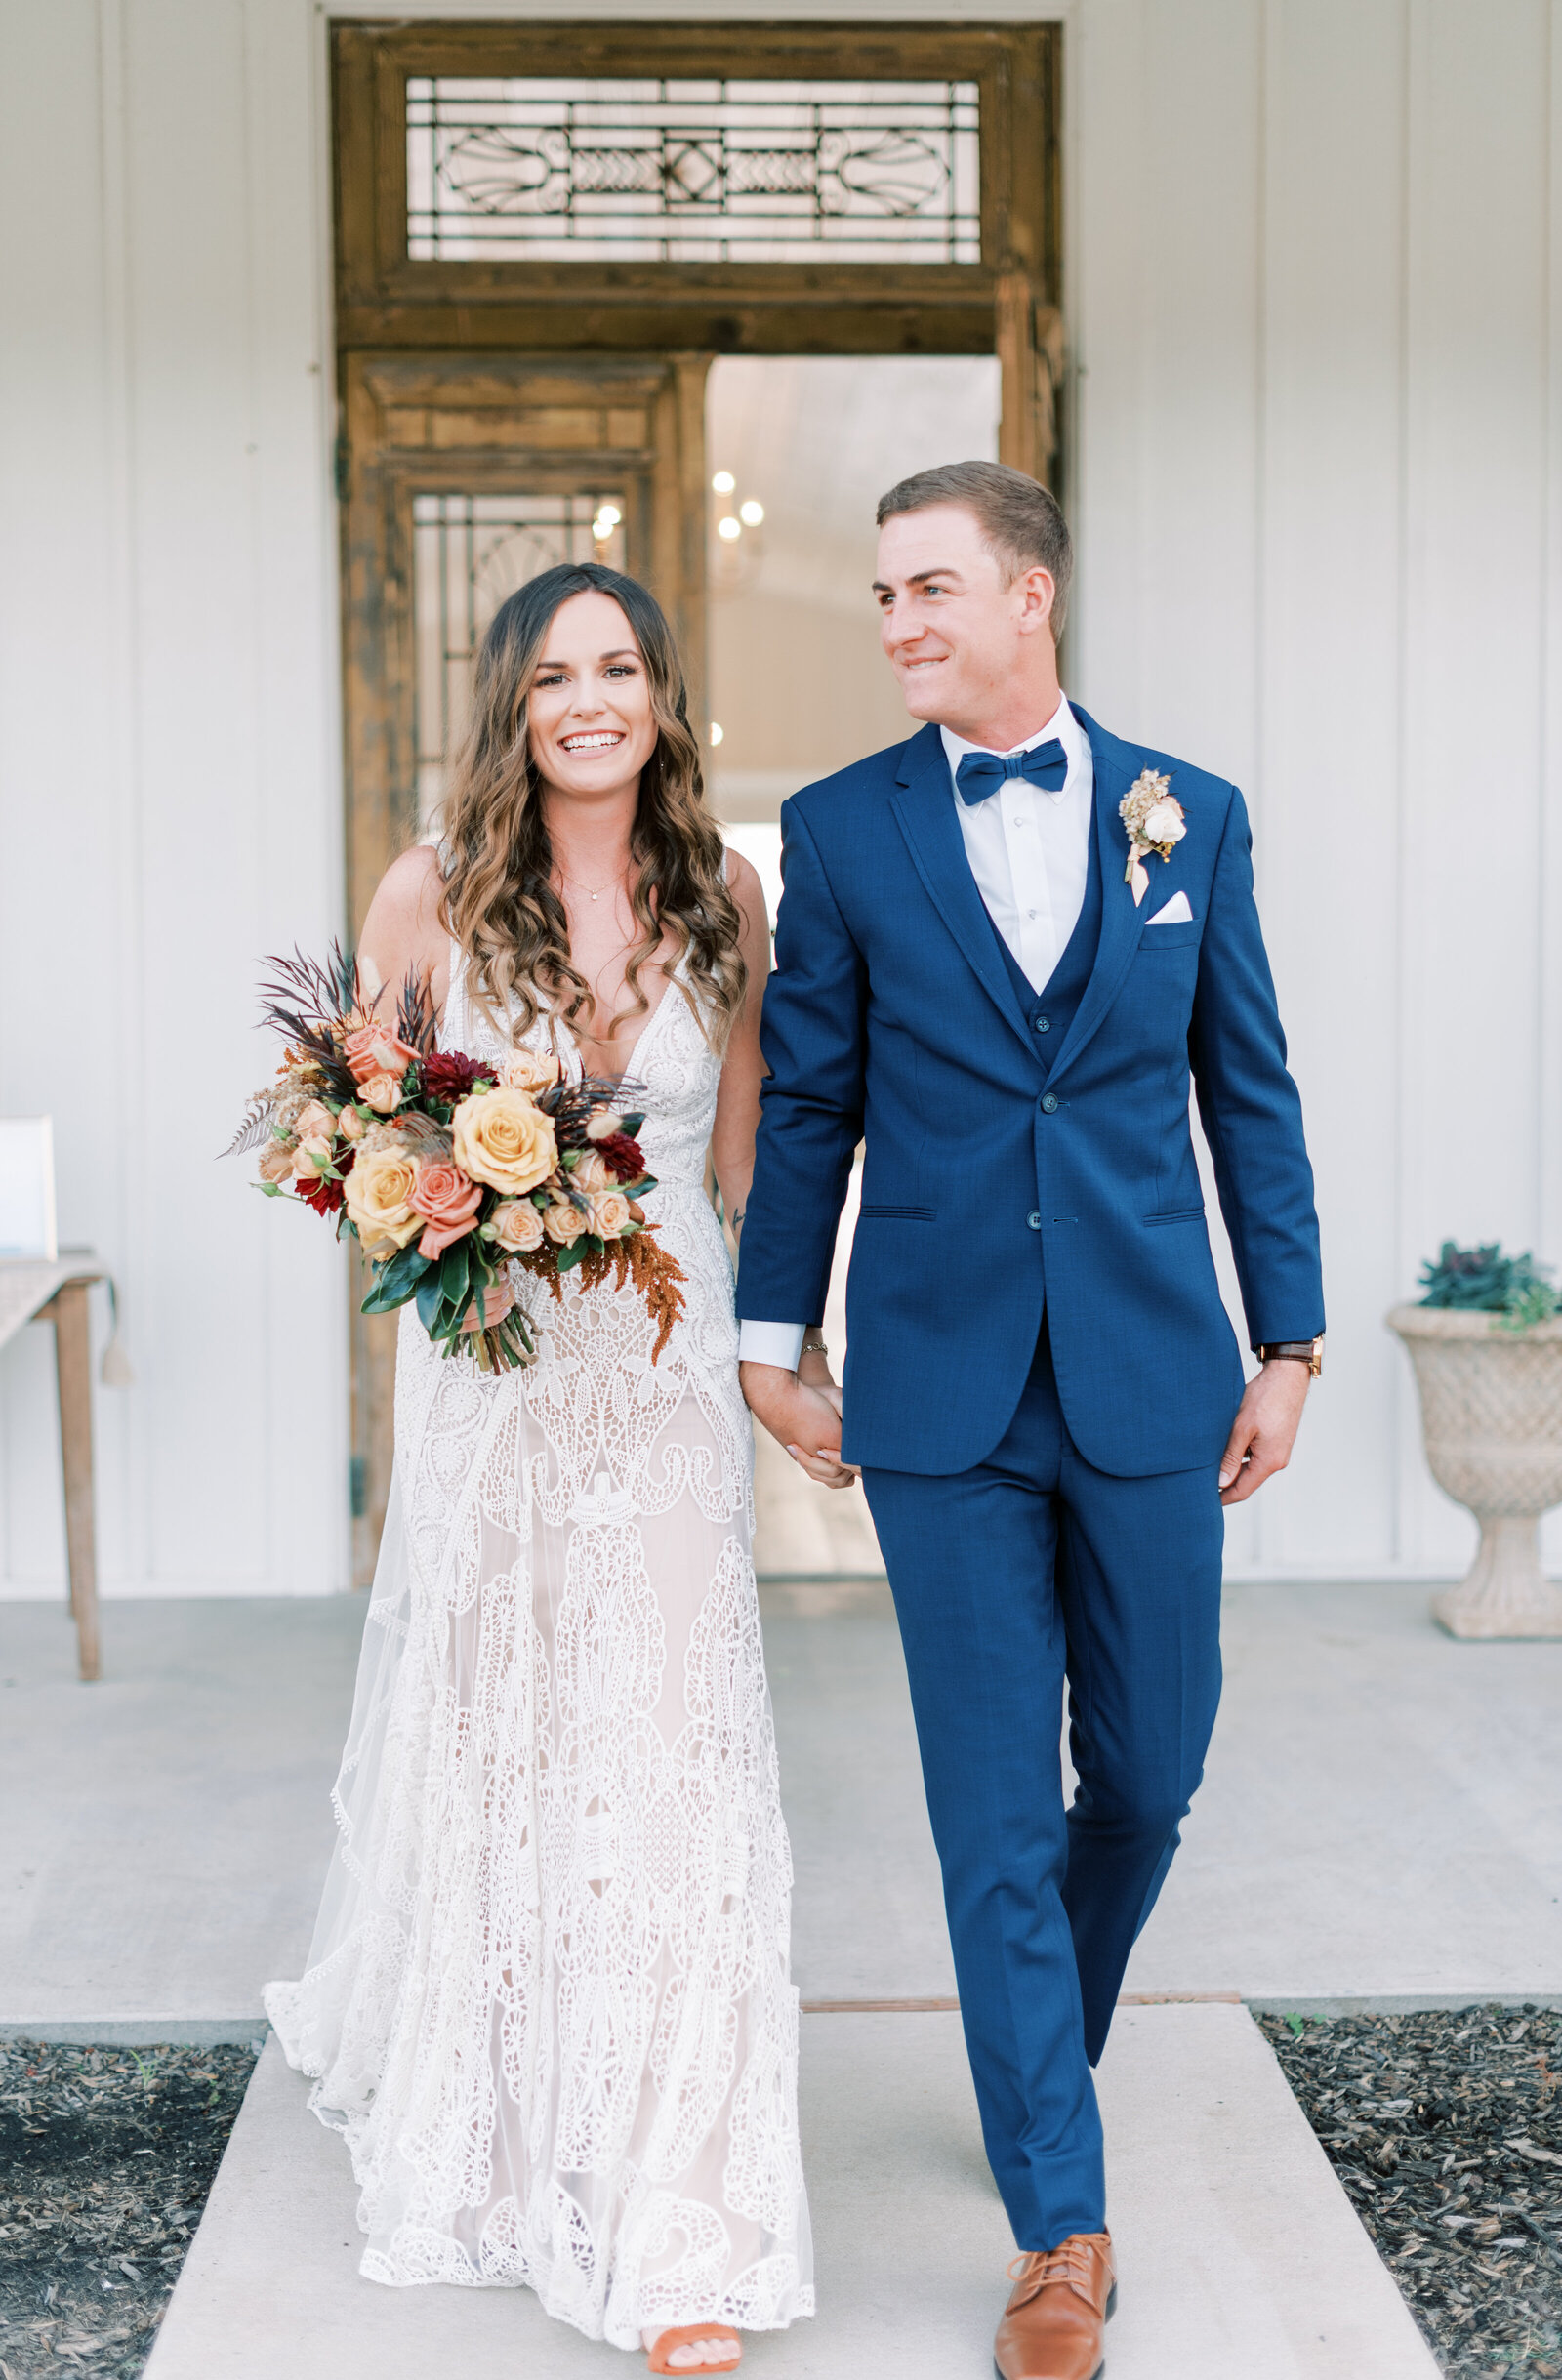 Portrait of bride and groom in a cream wedding gown and blue suit holding hands in front of  wooden door.